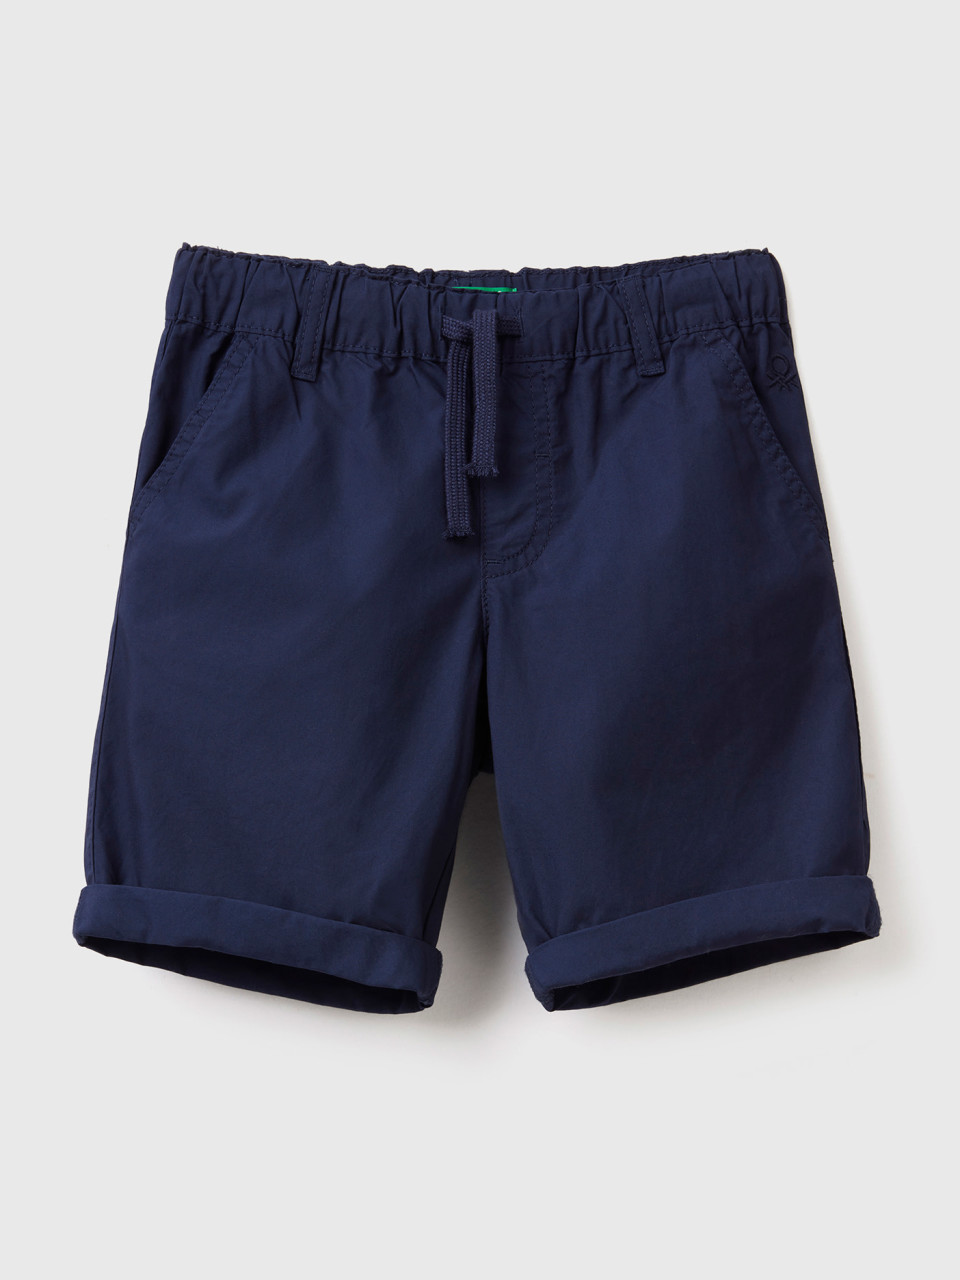 Benetton, 100% Cotton Shorts With Drawstring, Dark Blue, Kids